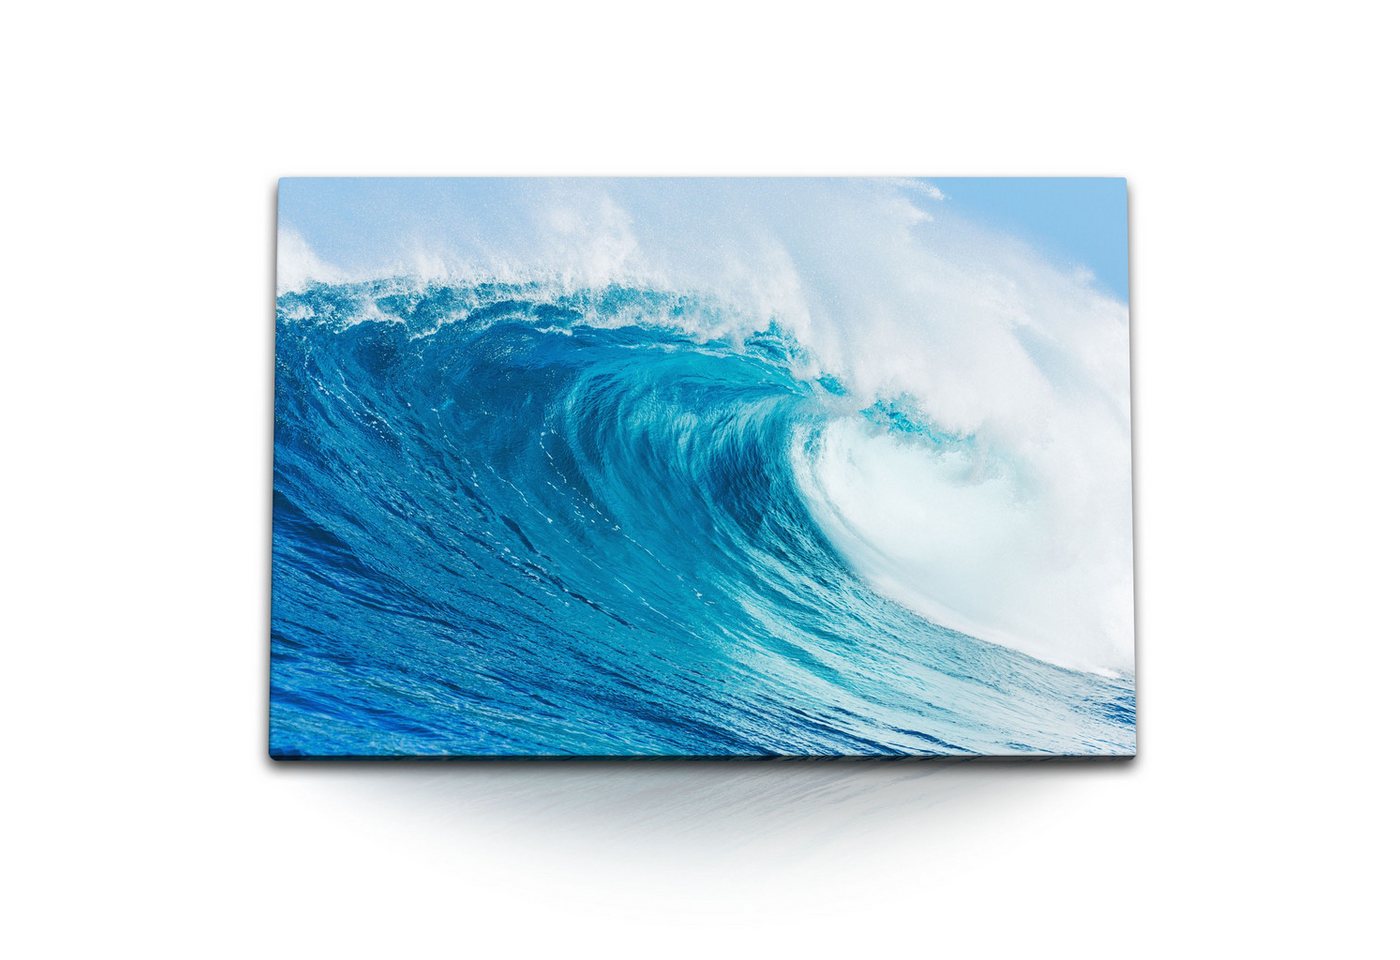 Sinus Art Leinwandbild 120x80cm Wandbild auf Leinwand Ozean Welle Blau Hellblau Surfen Natur, (1 St) von Sinus Art